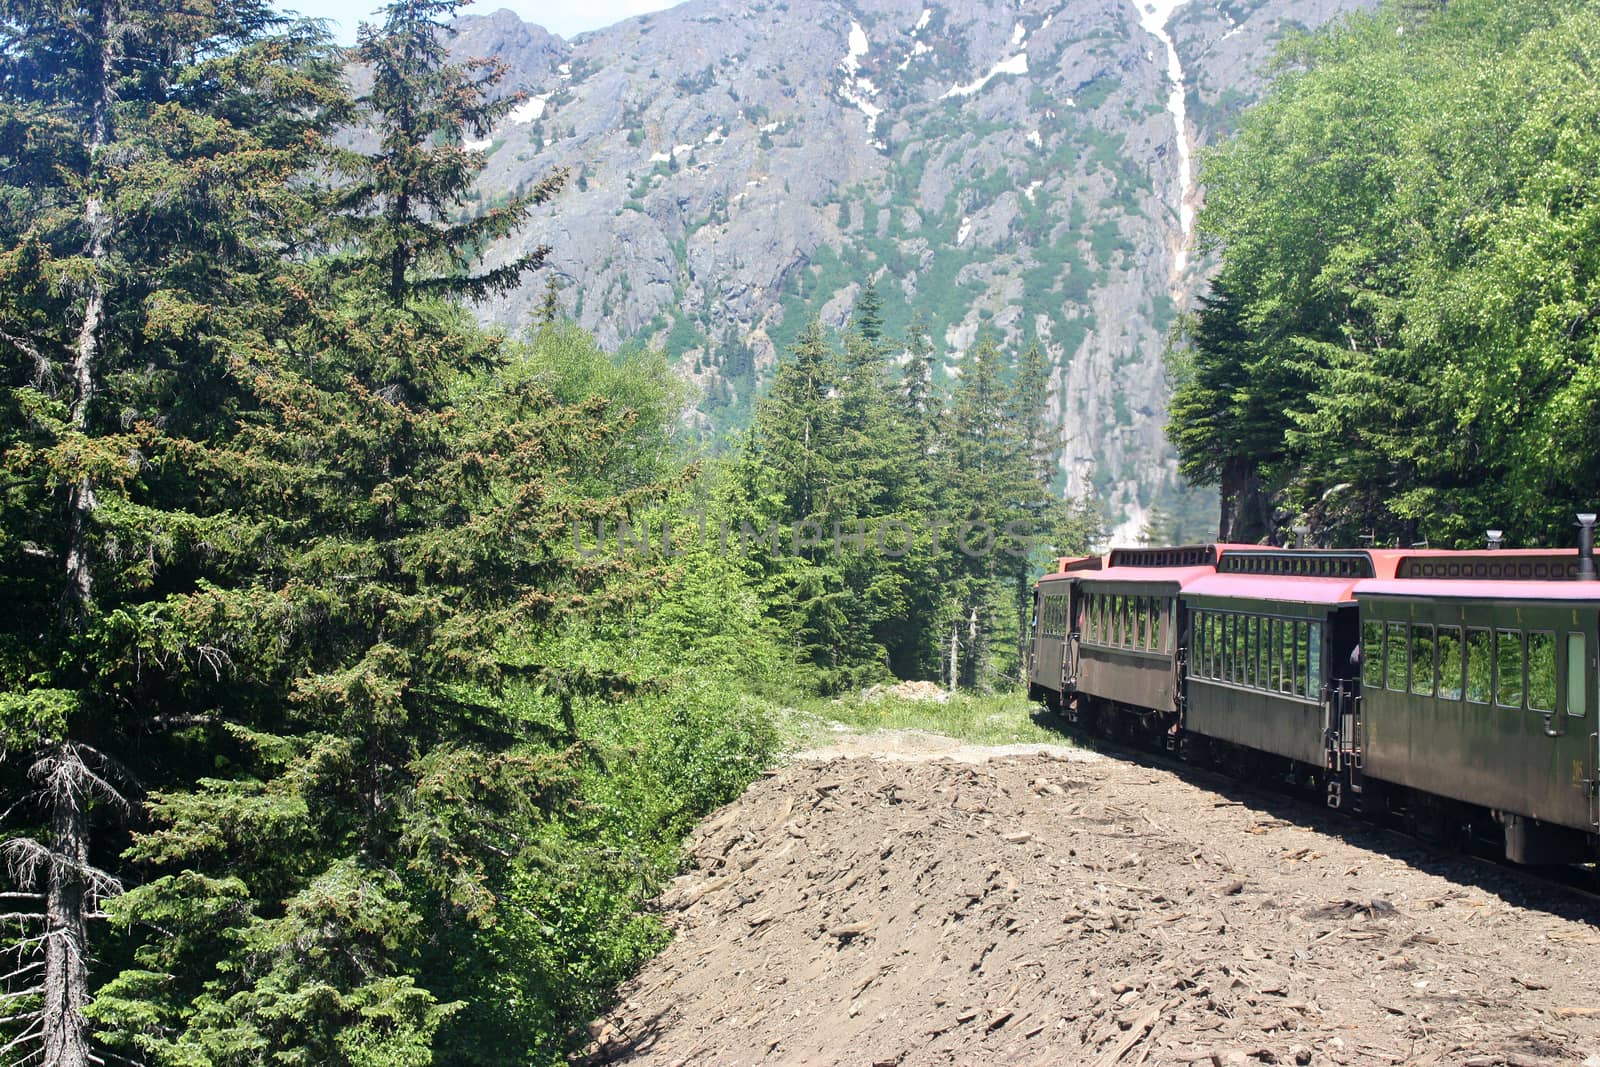 Old train traveling through mountains